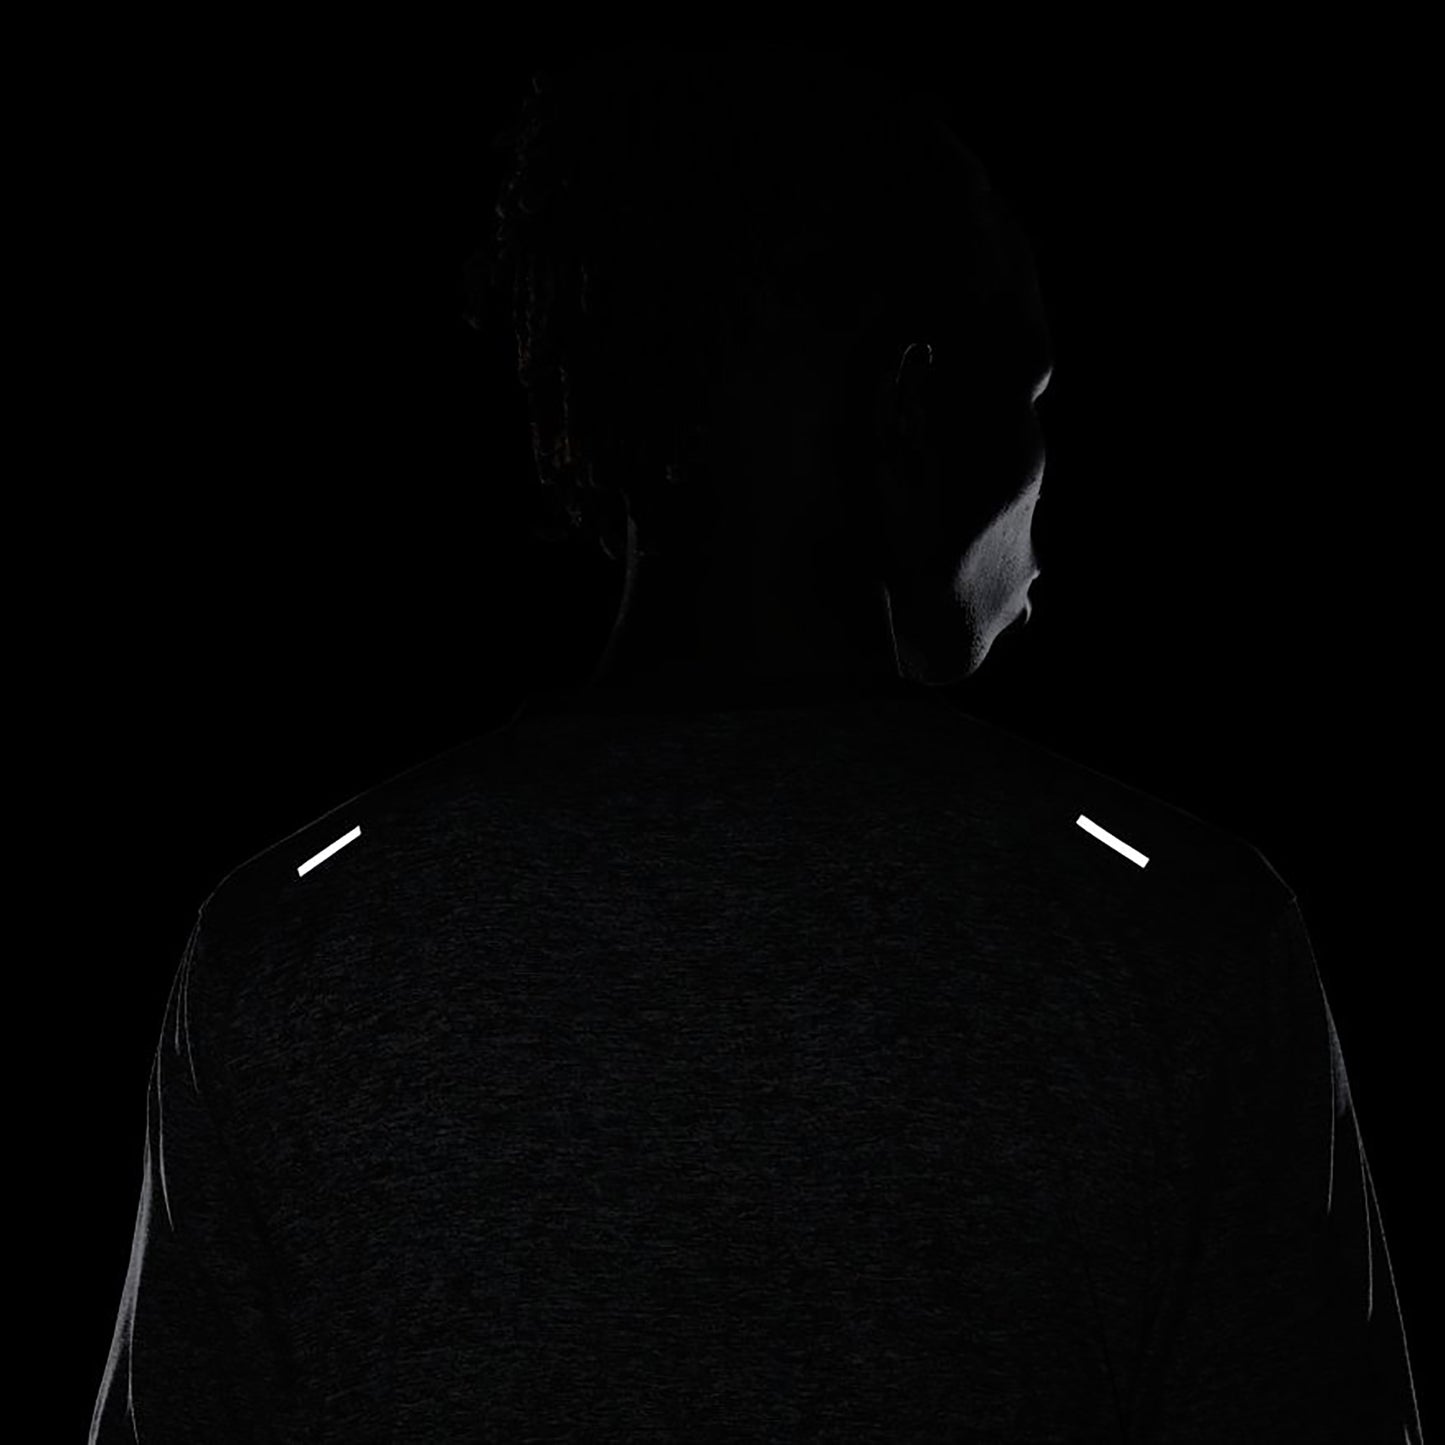 Men's Nike Dri-FIT Rise 365 Short Sleeve Running Top - Black/Heather/Reflective Silver